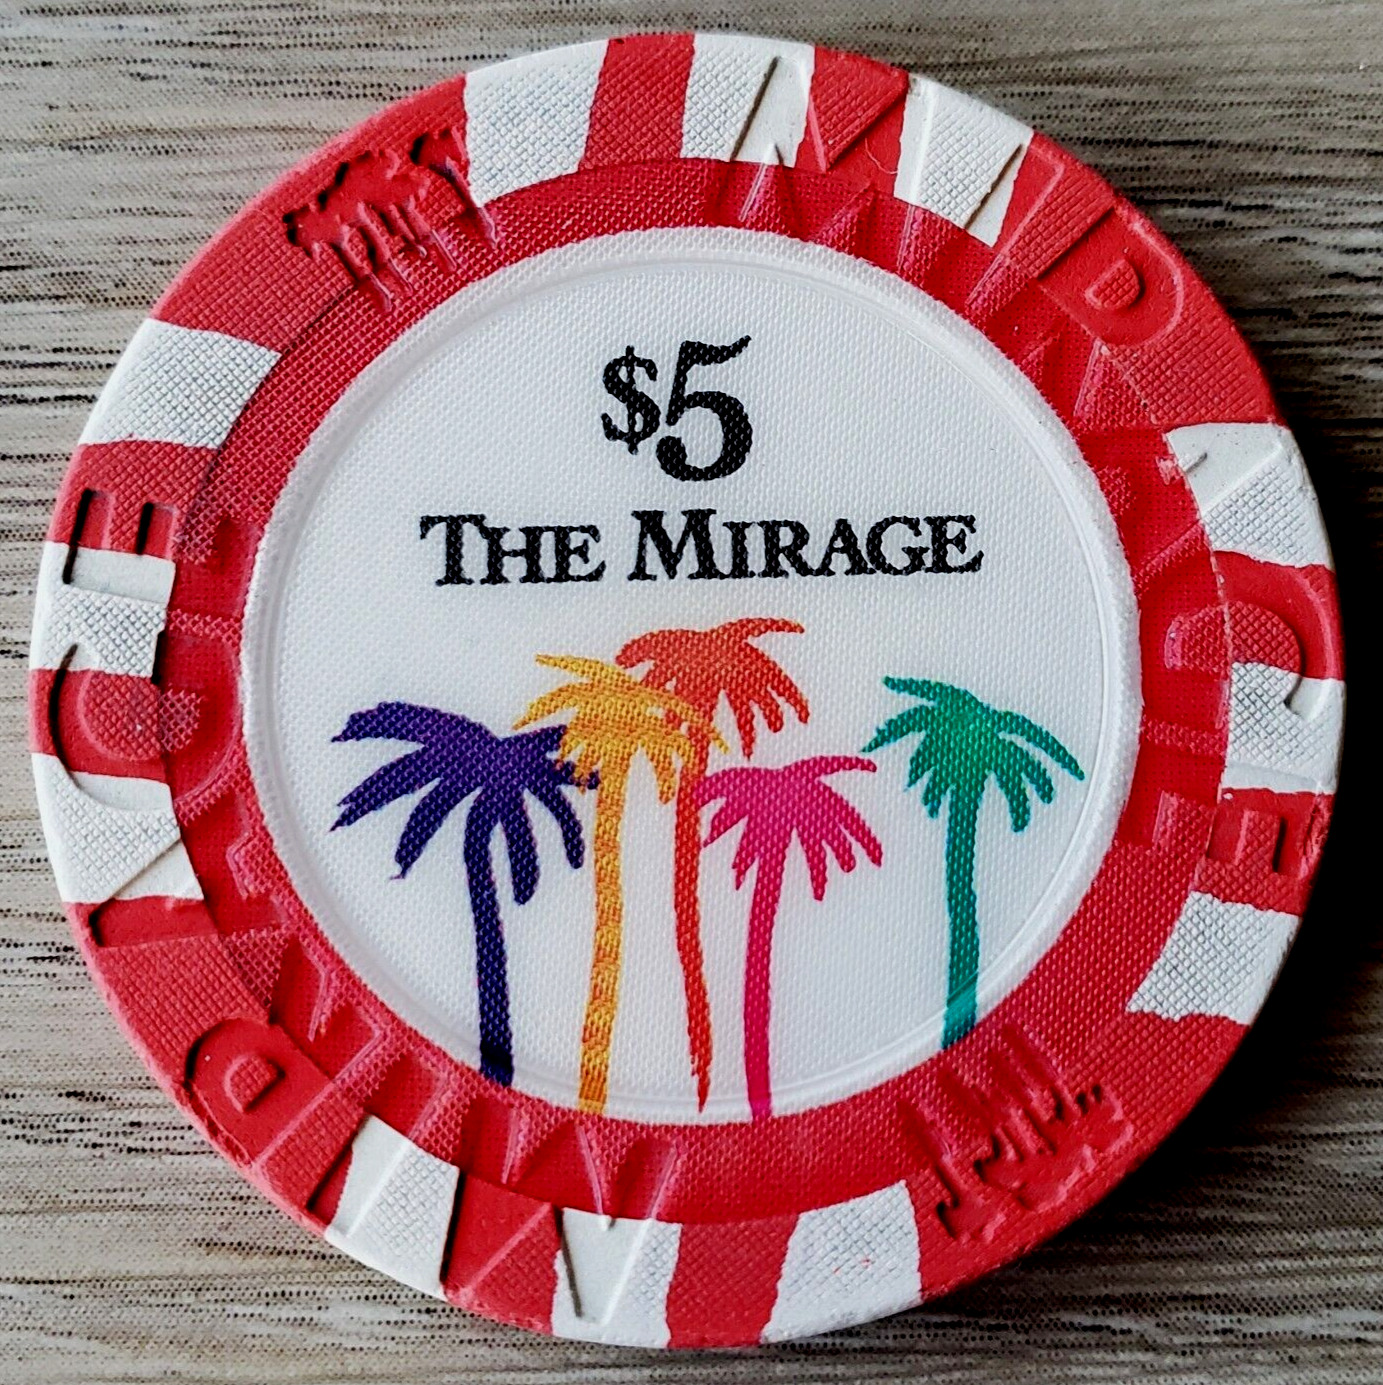 $5 Las Vegas Mirage House Casino Chip